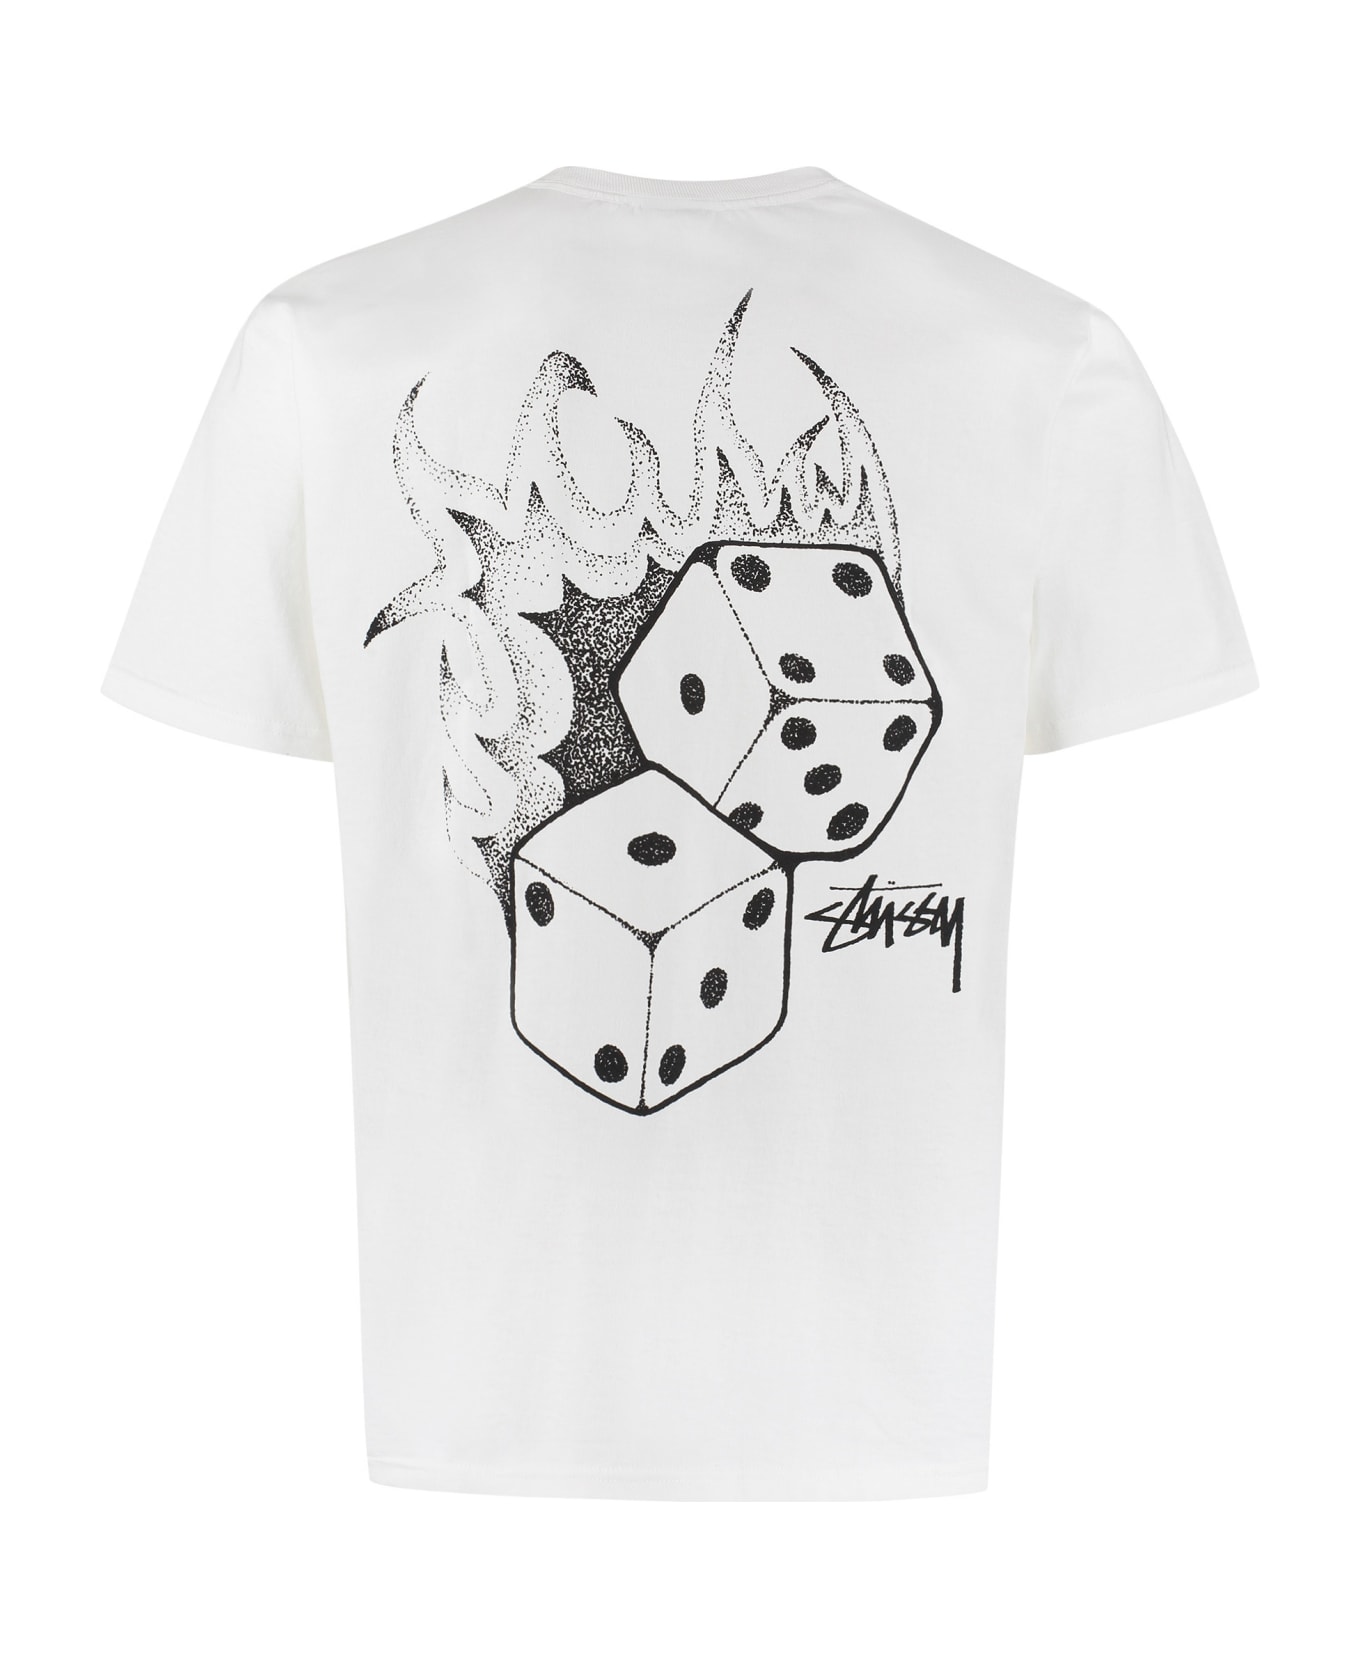 Stussy Fire Dice Cotton T-shirt - White